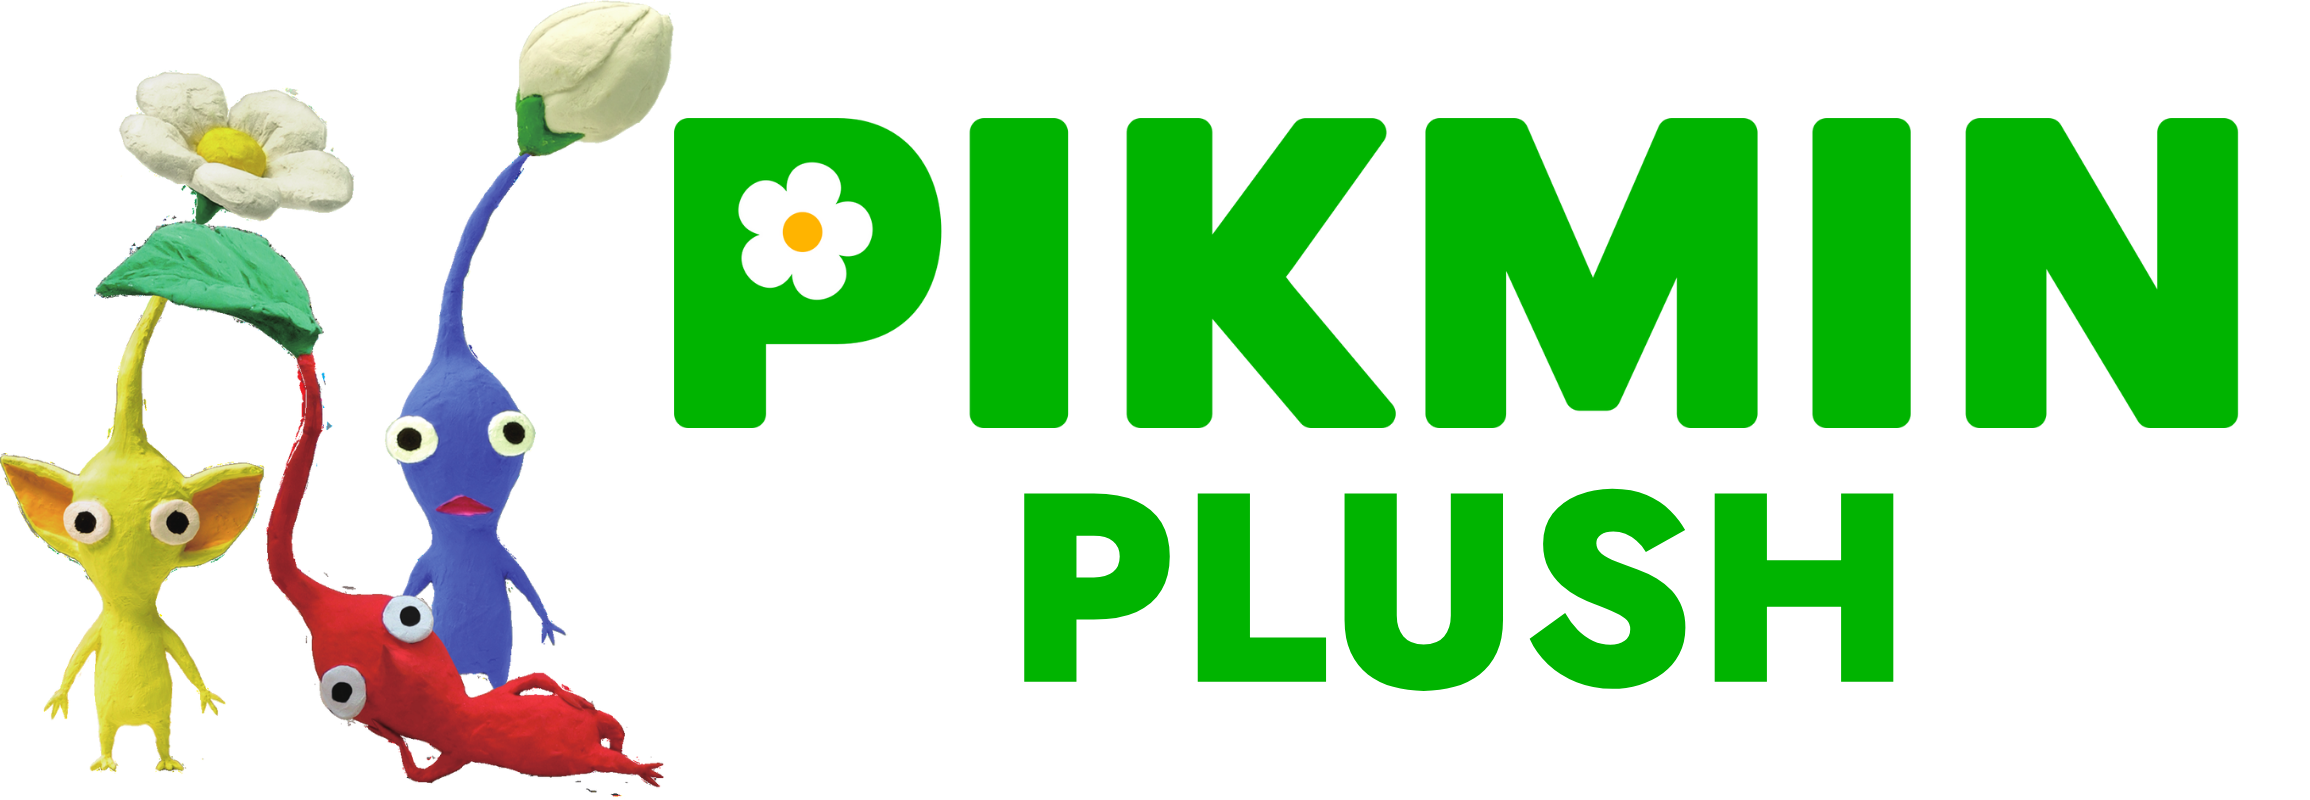 pikmin plush logo - Pikmin Plush